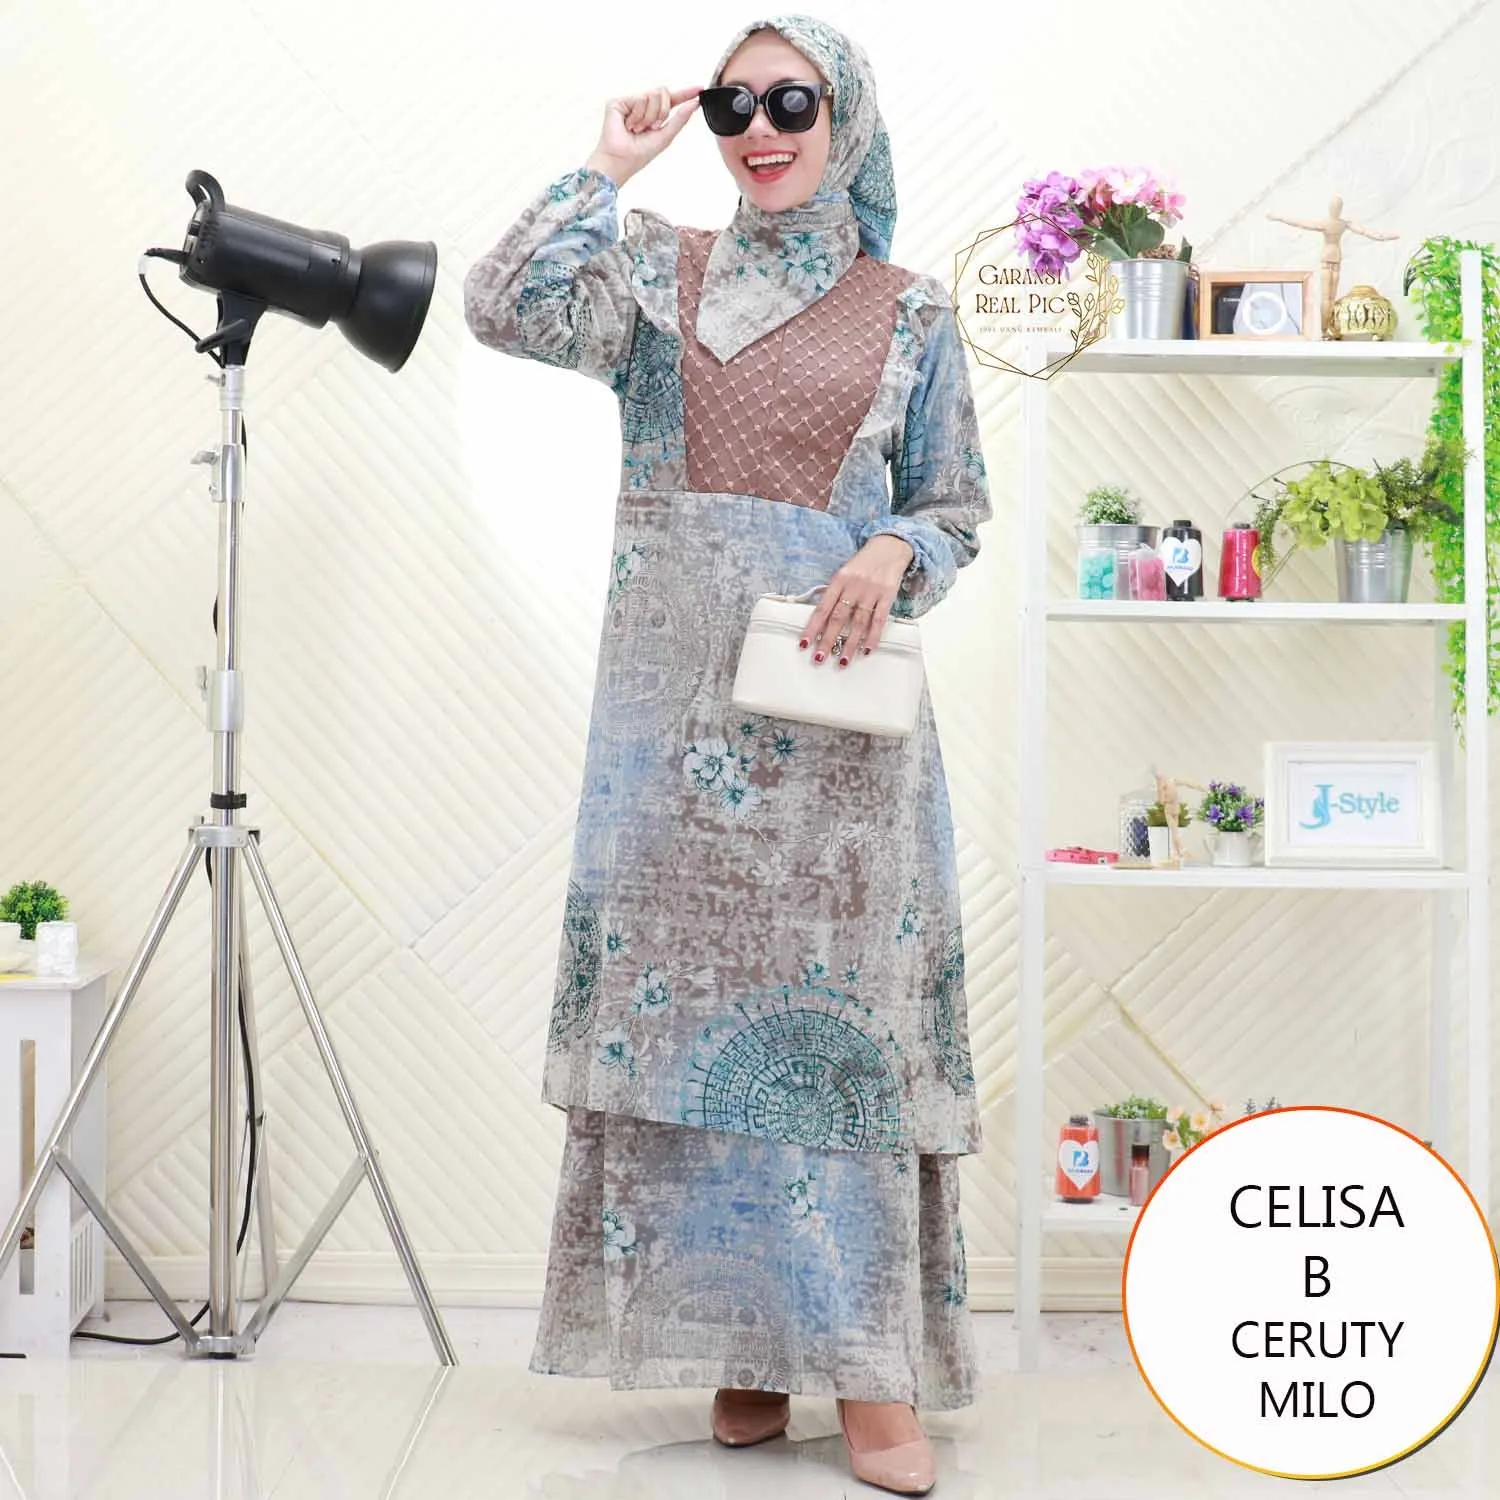 Celisa Gamis Wanita Muslimah Busui Friendly Set Hijab Ceruty Motif Print Umpak Susun Depan ERD002 ceruty - bajubaru.id, Belanja Online di bajubaru.id saja 